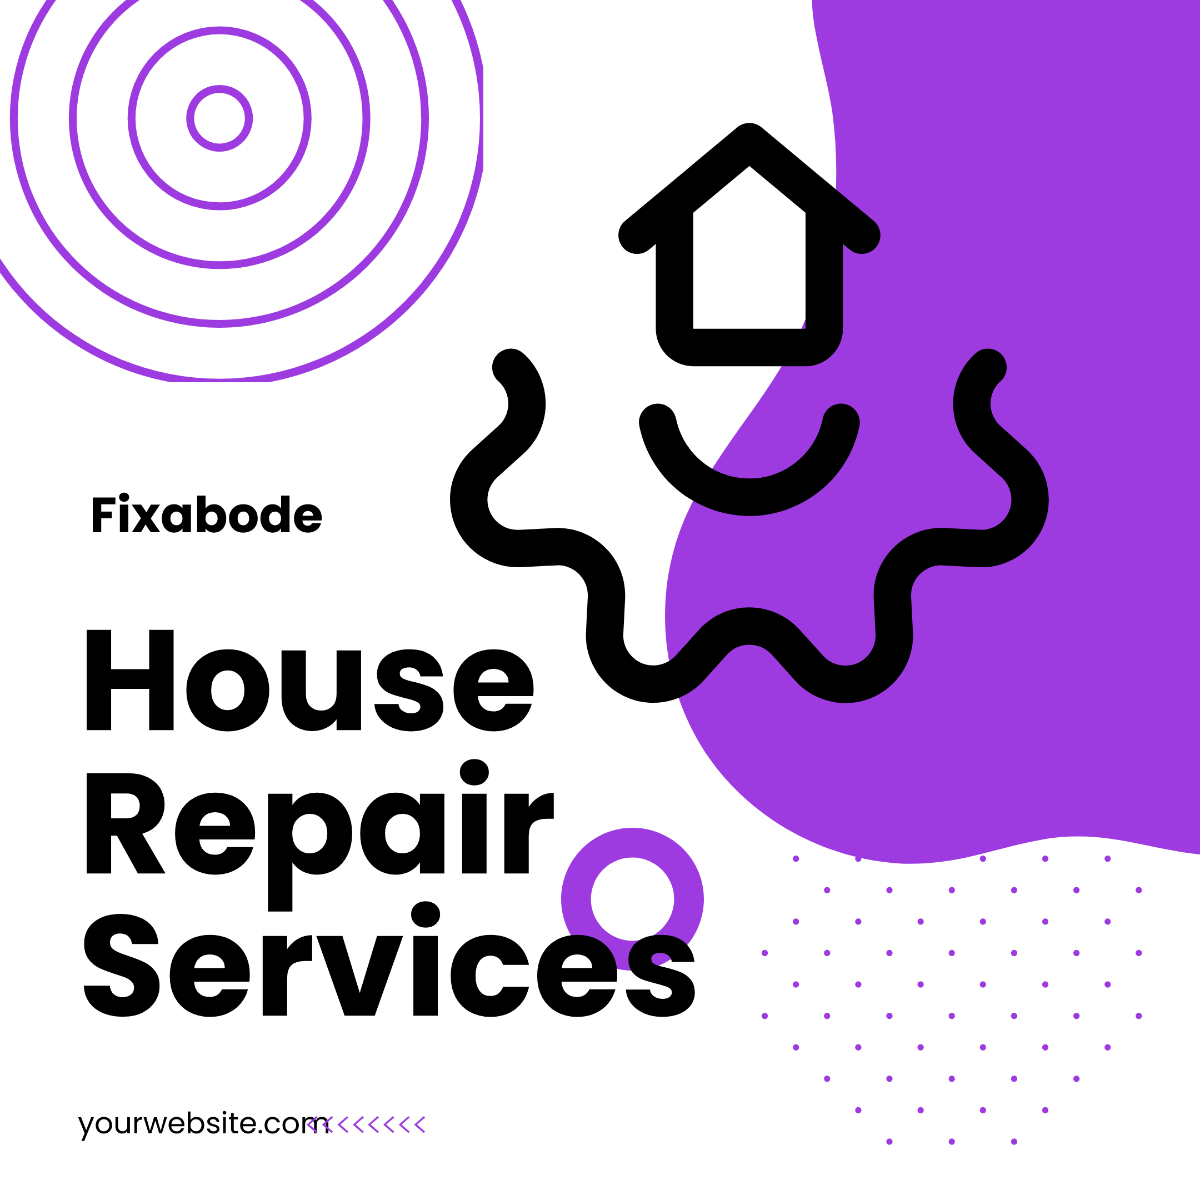 Free House Repair Service Instagram Post Template